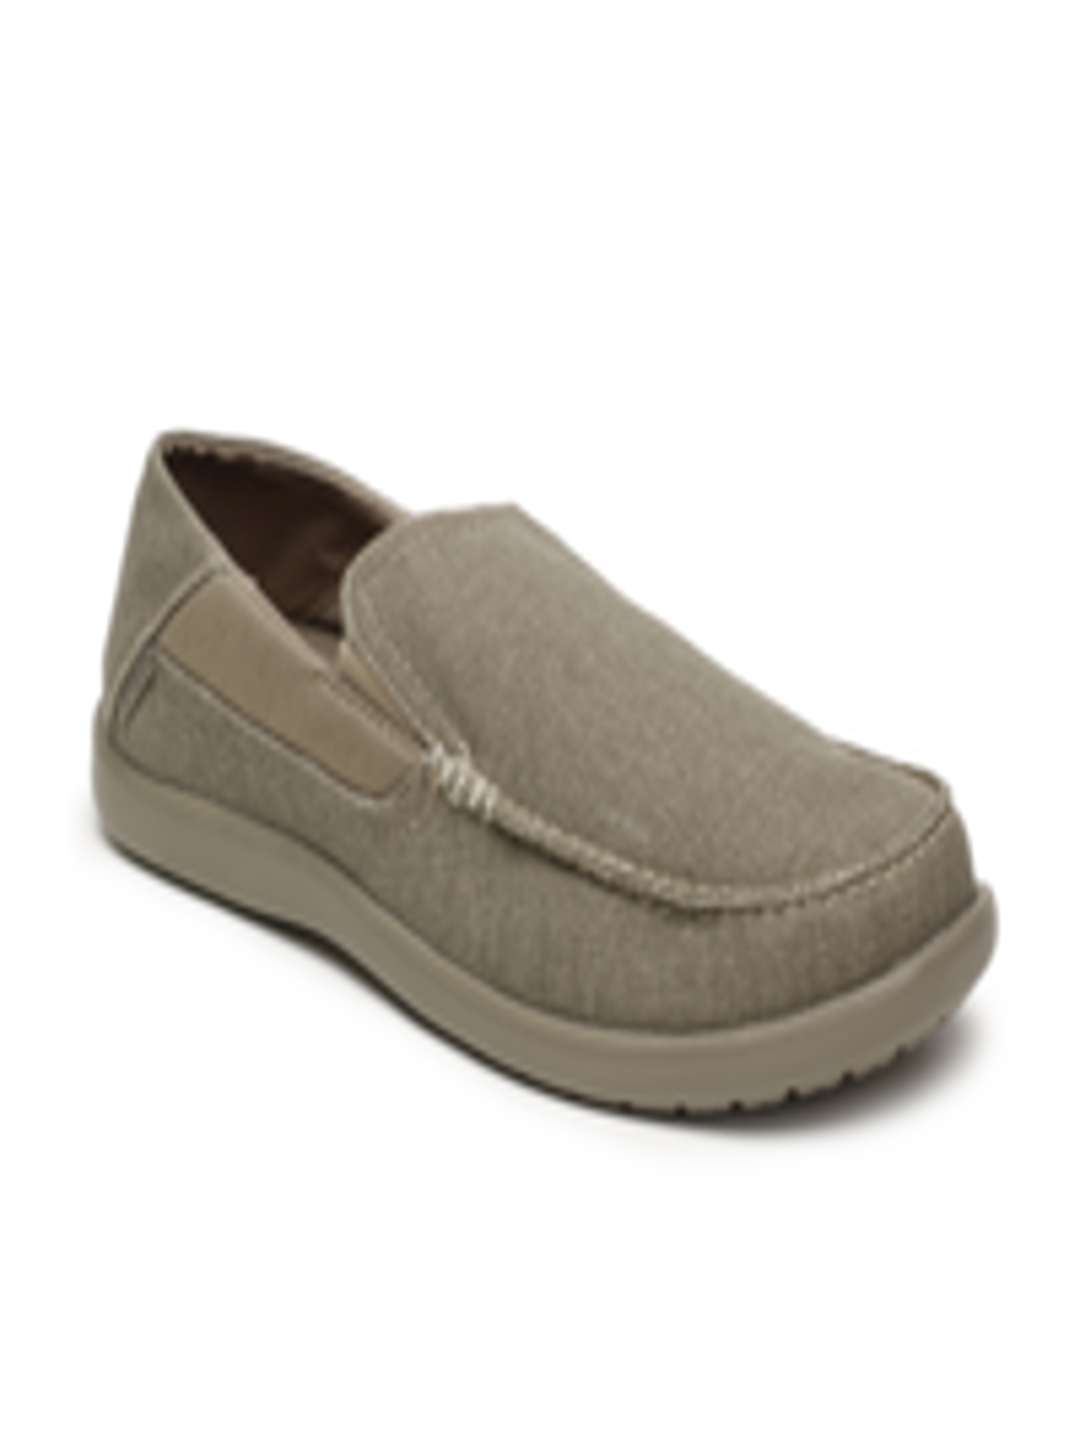 Buy Crocs Men Khaki Slip On Sneakers - Casual Shoes for Men 6516432 ...